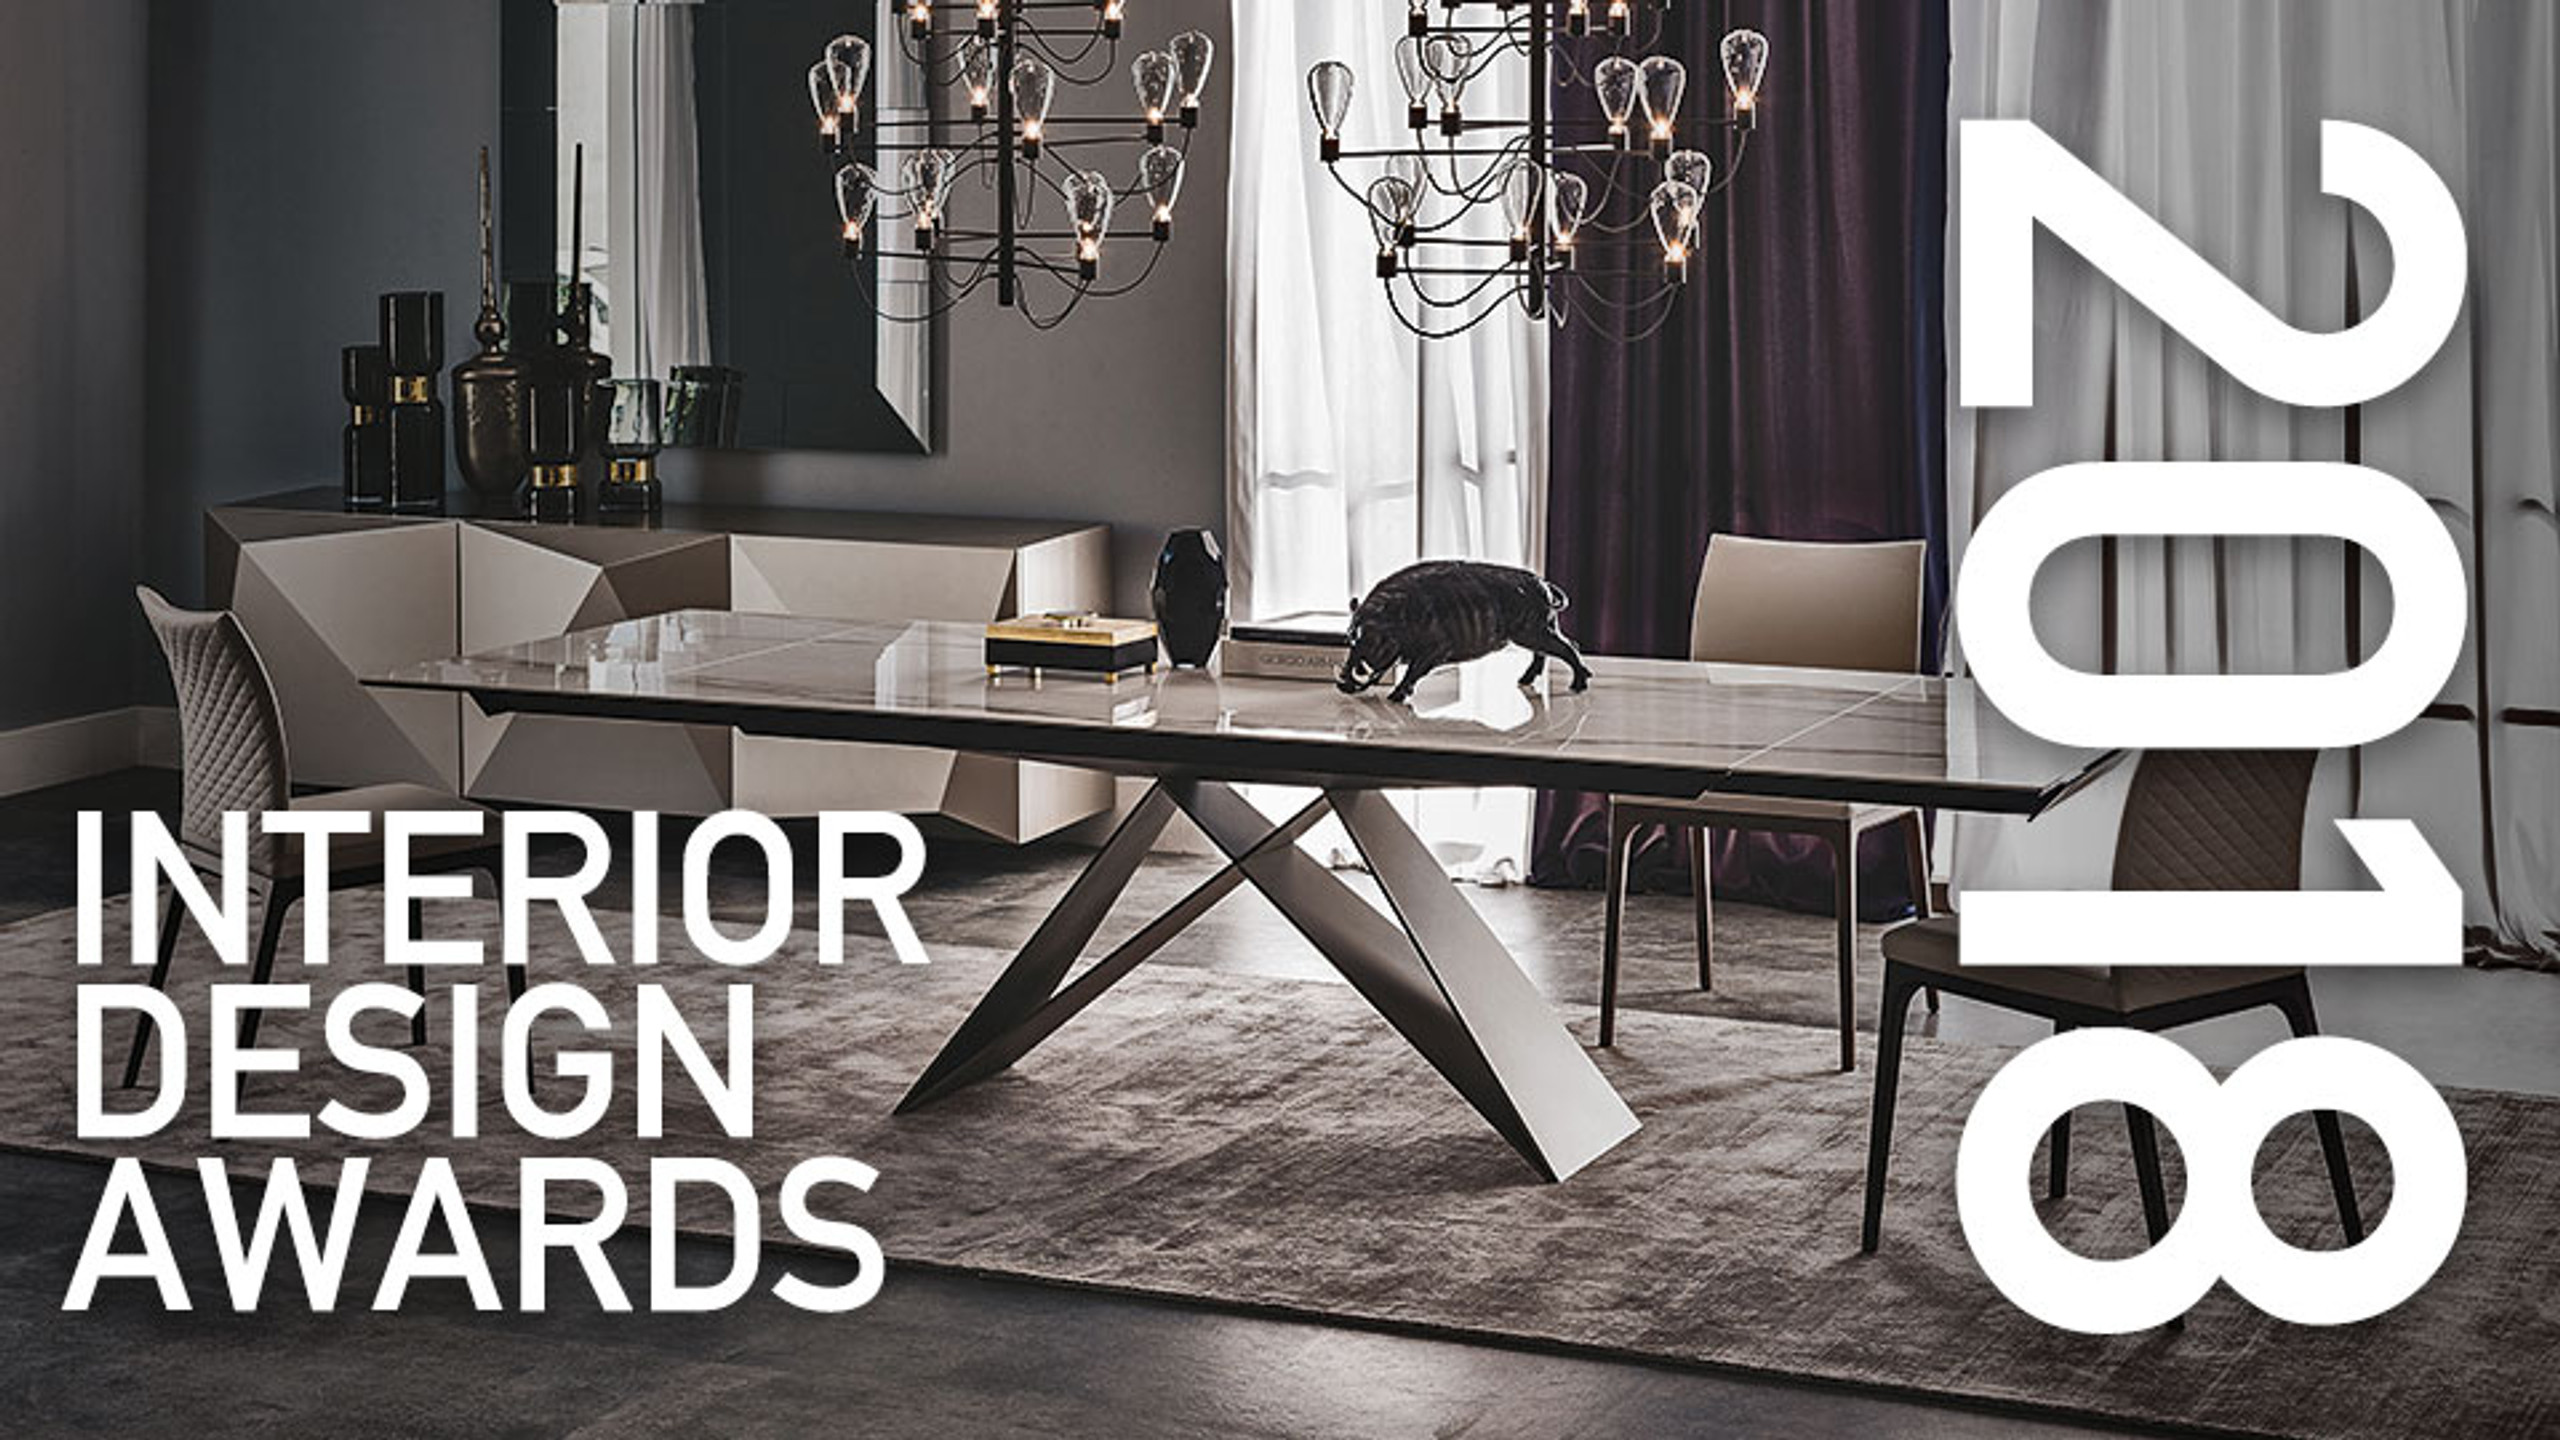 Chaplins’ Interior Design Awards